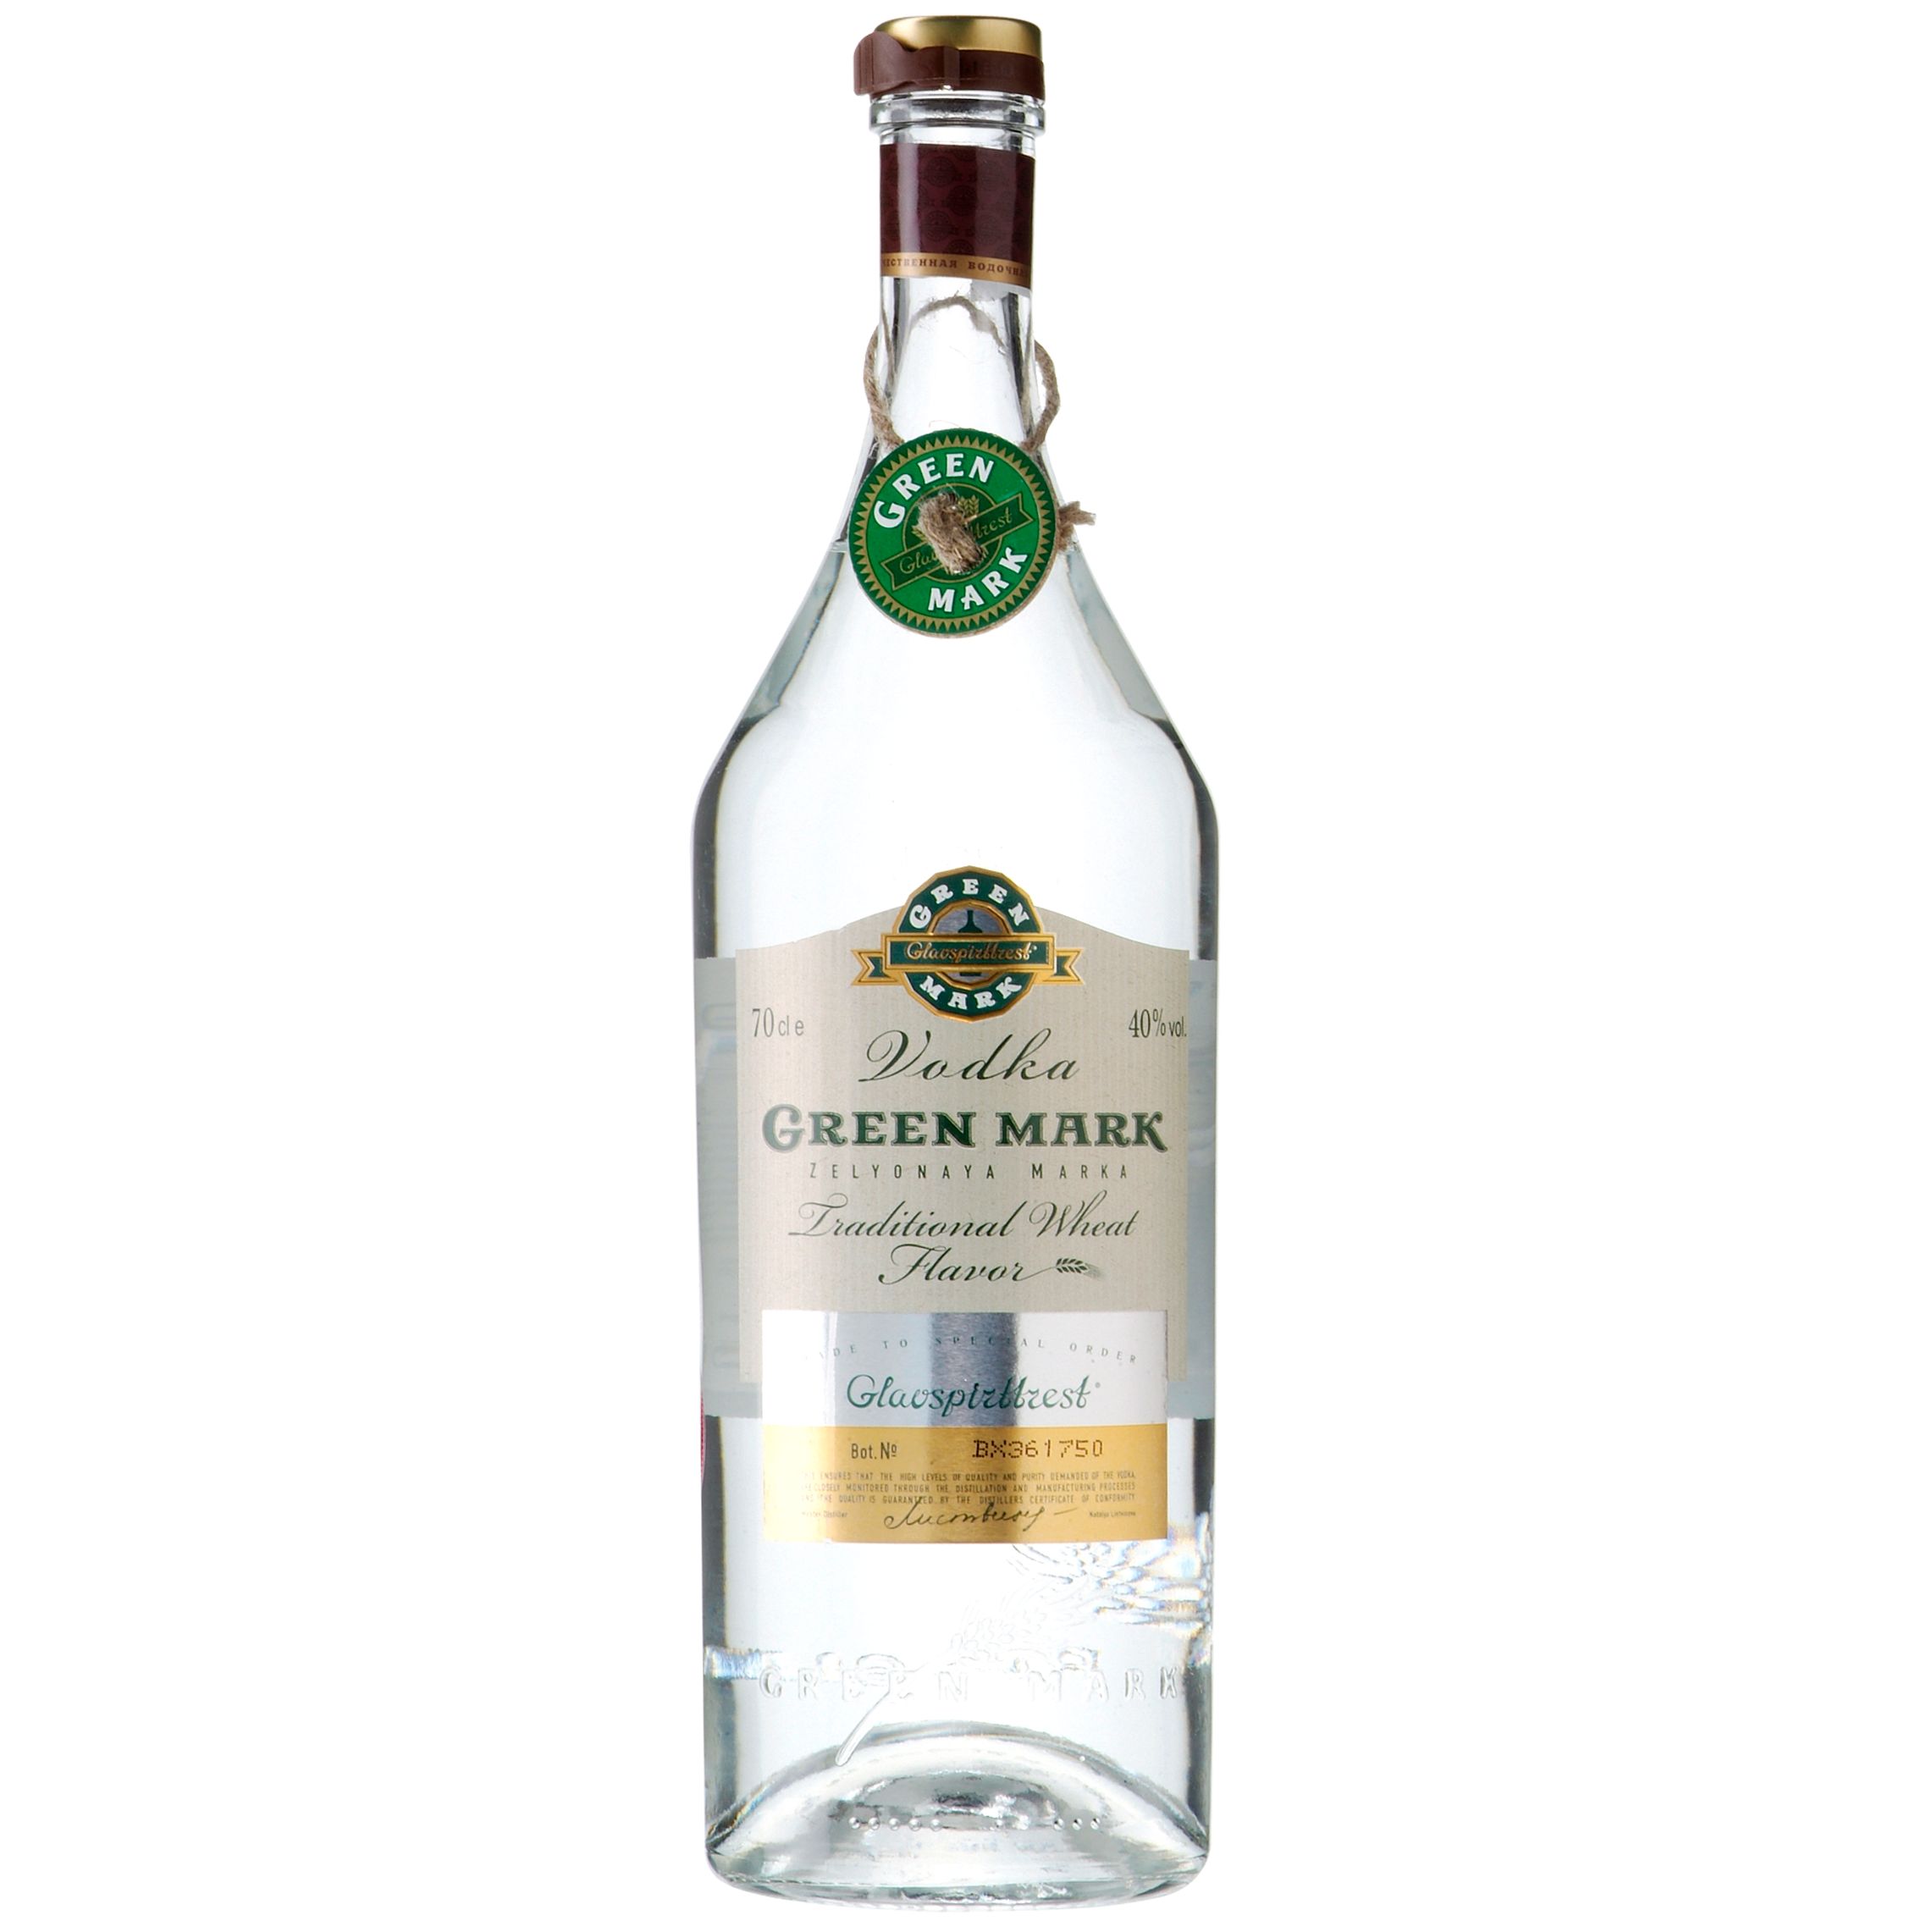 Green Mark Russian Wheat Vodka at John Lewis